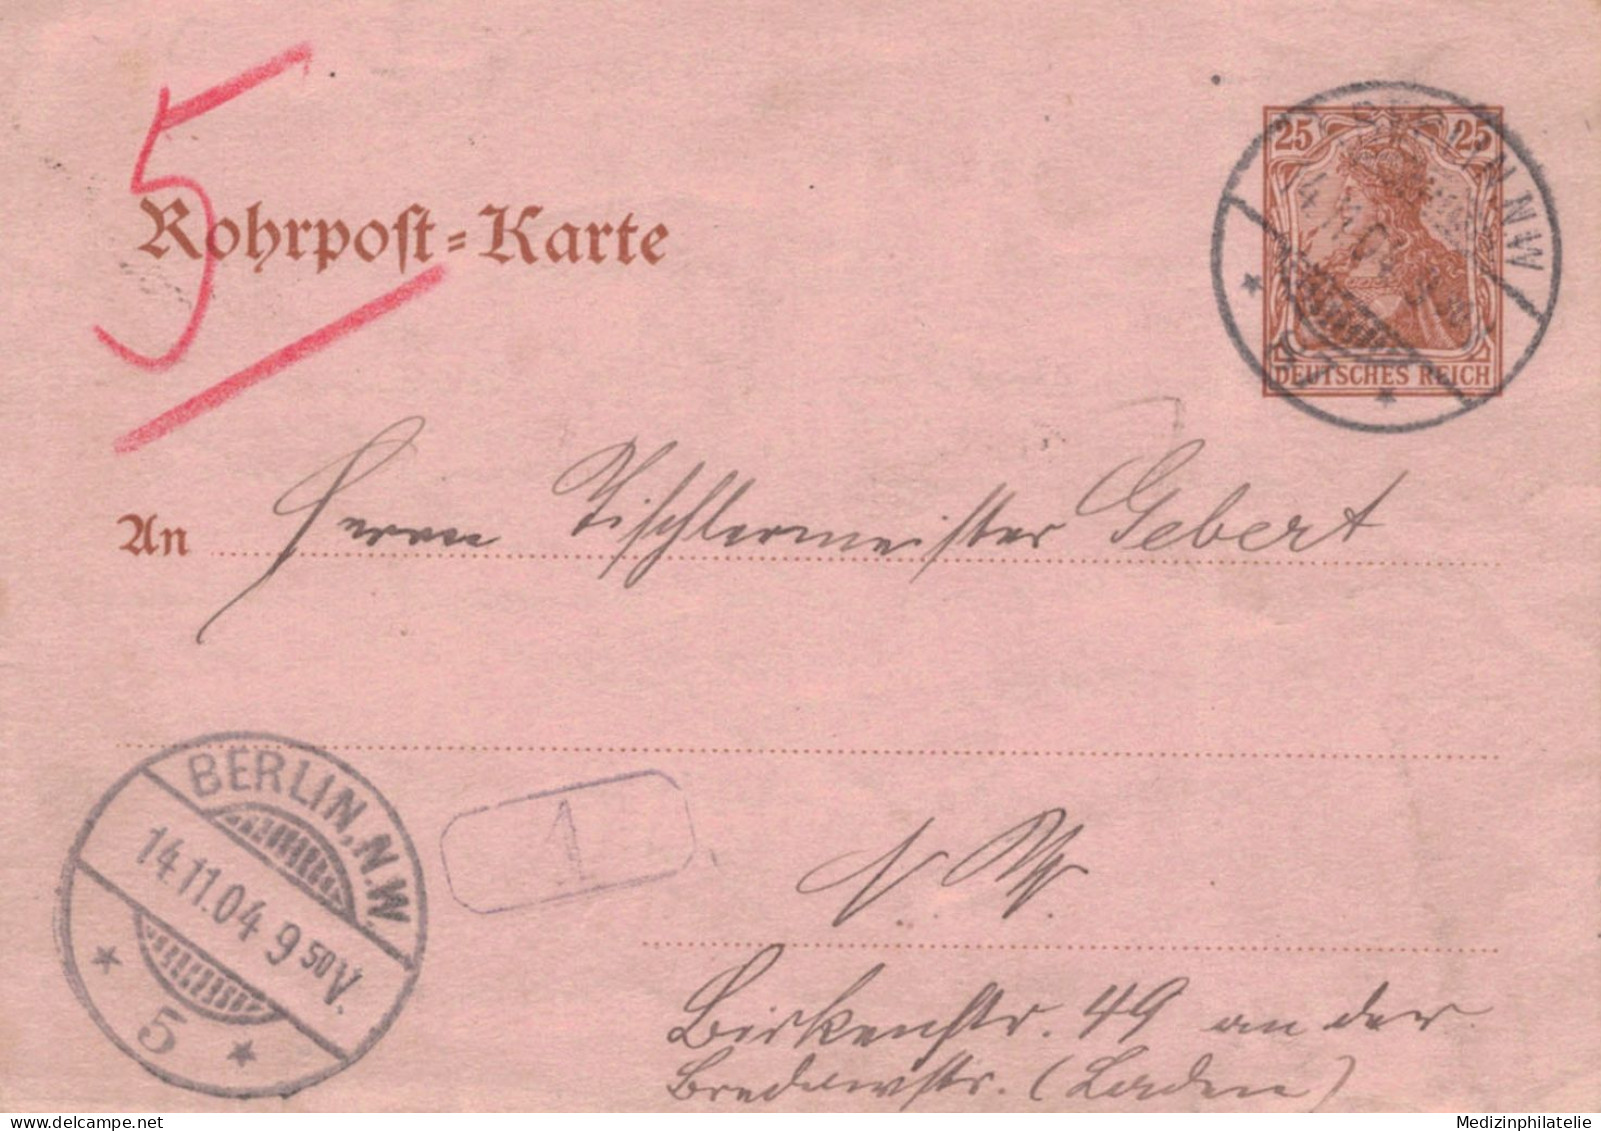 Rohrpost-Karte 25 Pf. Germania - Berlin 87 1904 > 5 09:50 - Cartoline